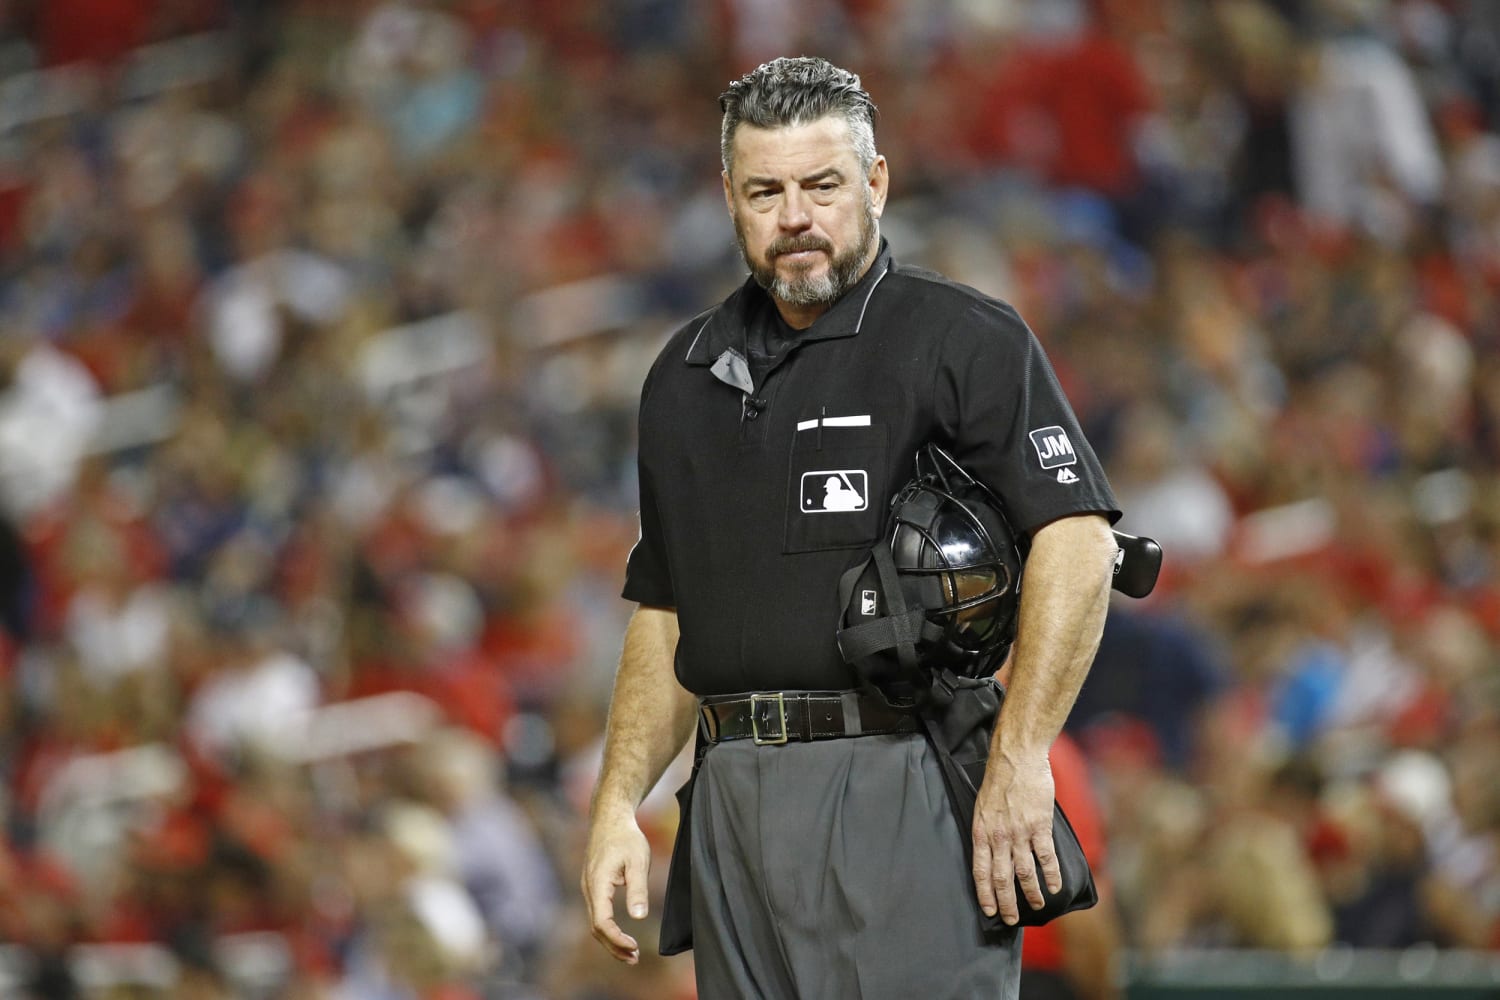 MLB Umpire Ángel Hernández Loses Appeal of Discrimination Suit